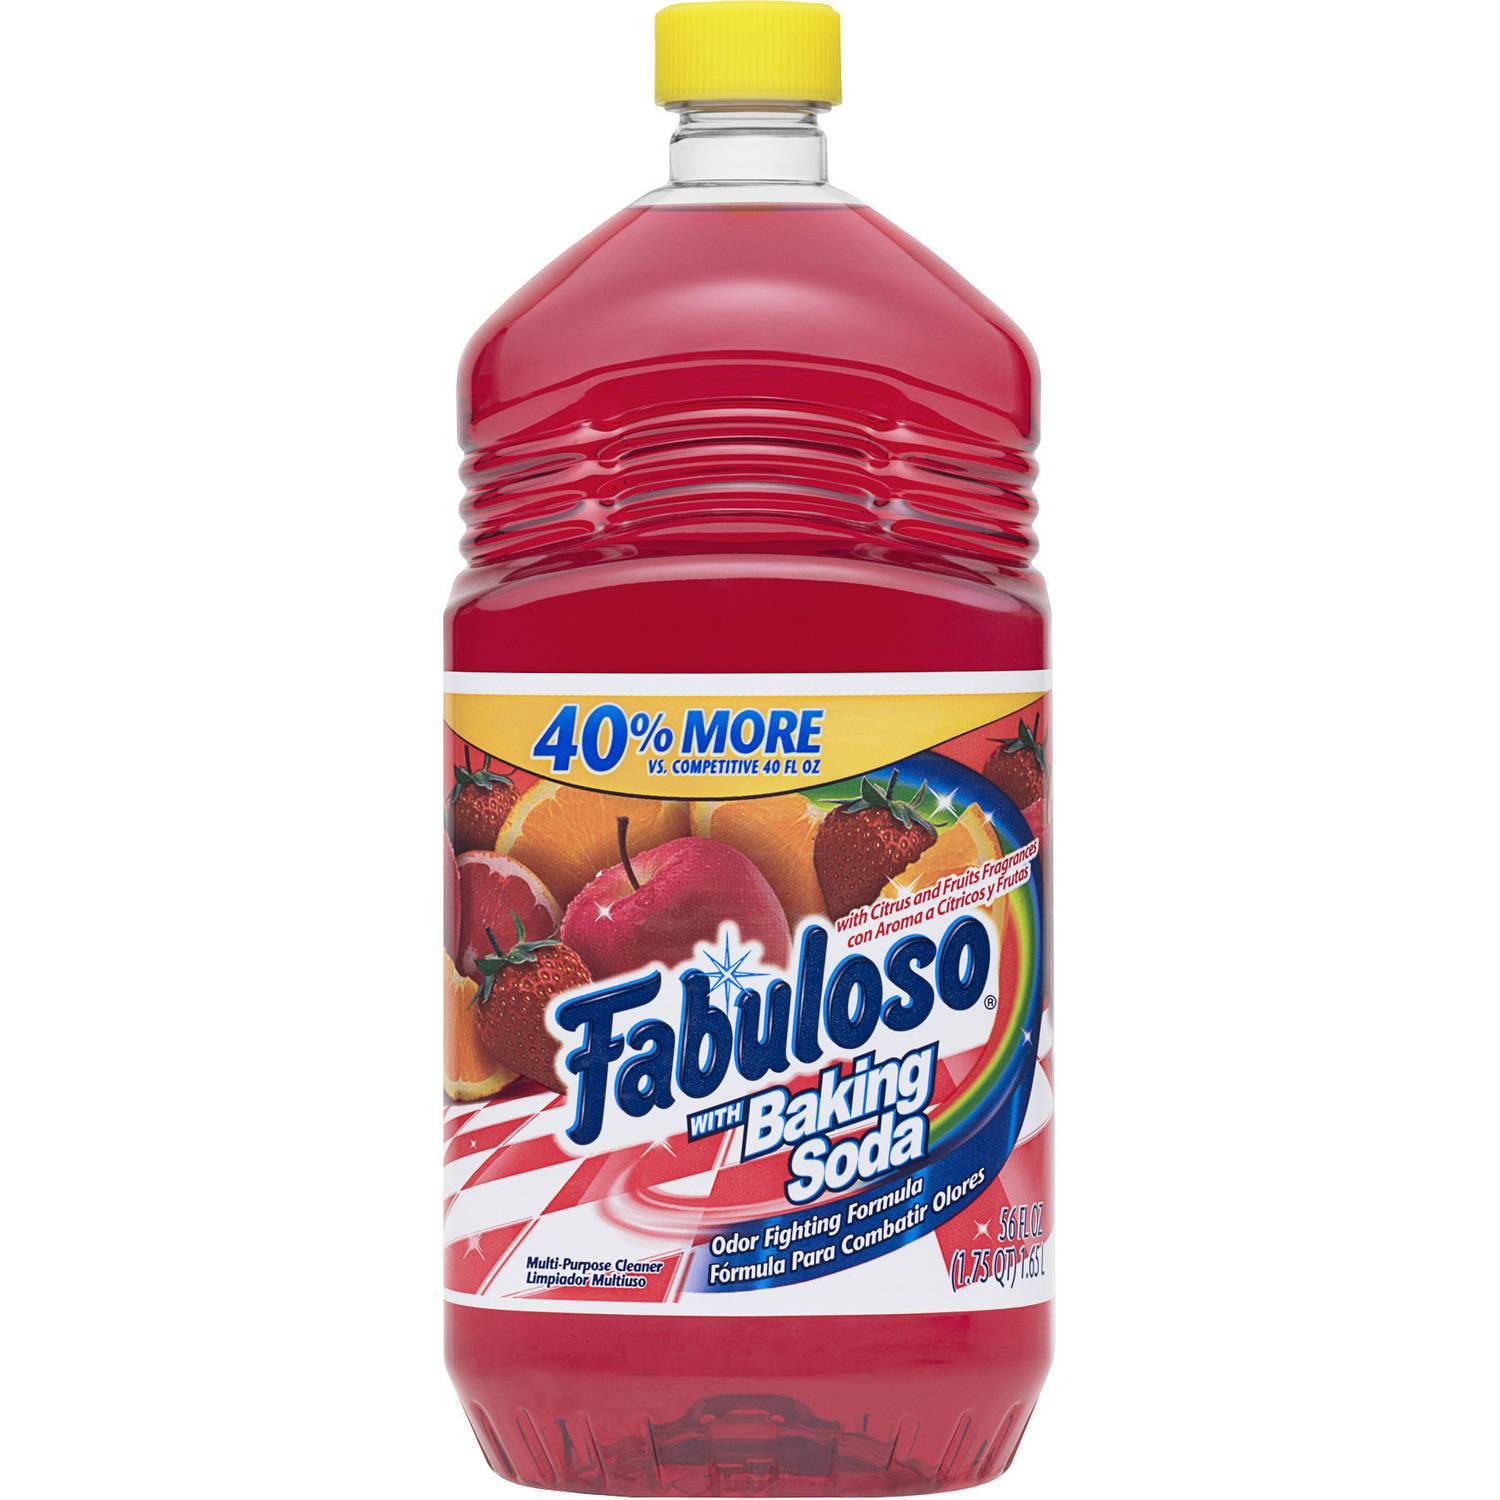 Fabuloso - Multi-Purpose Cleaner w/Baking Soda, Citrus & Fruits, 56 Fluid Ounce - Case of 6